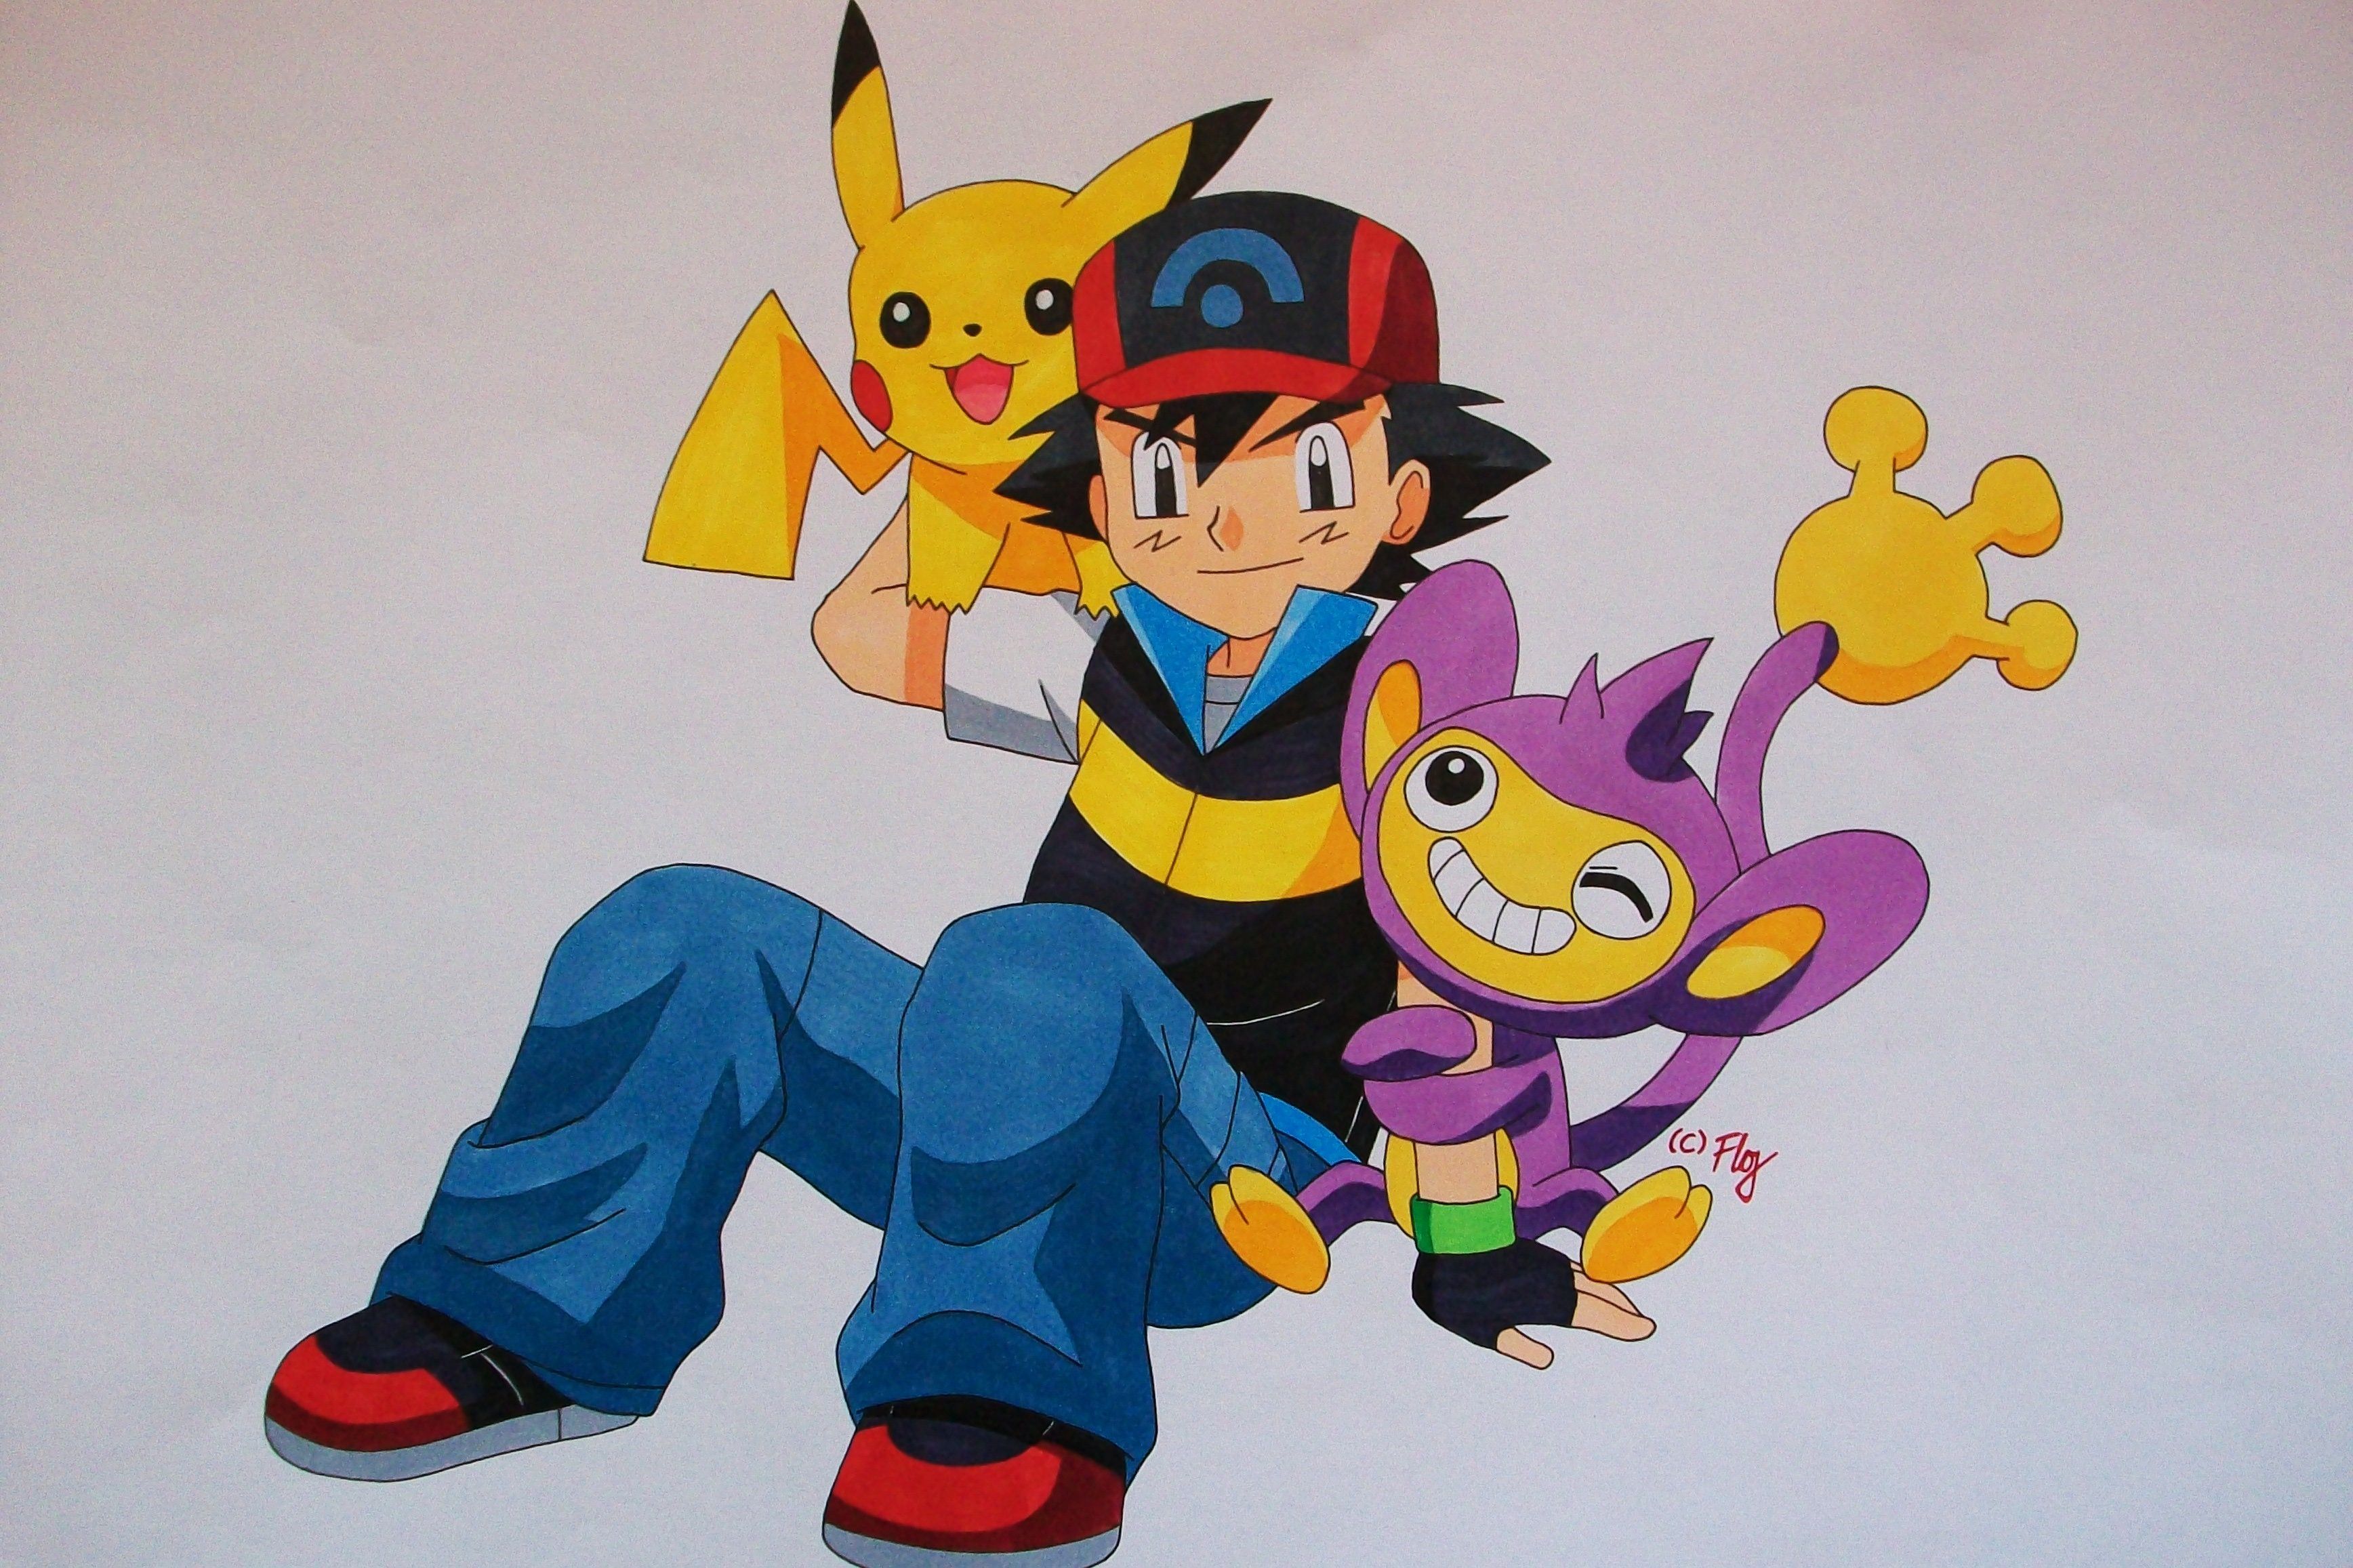 Ash, Pikachu and Aipom